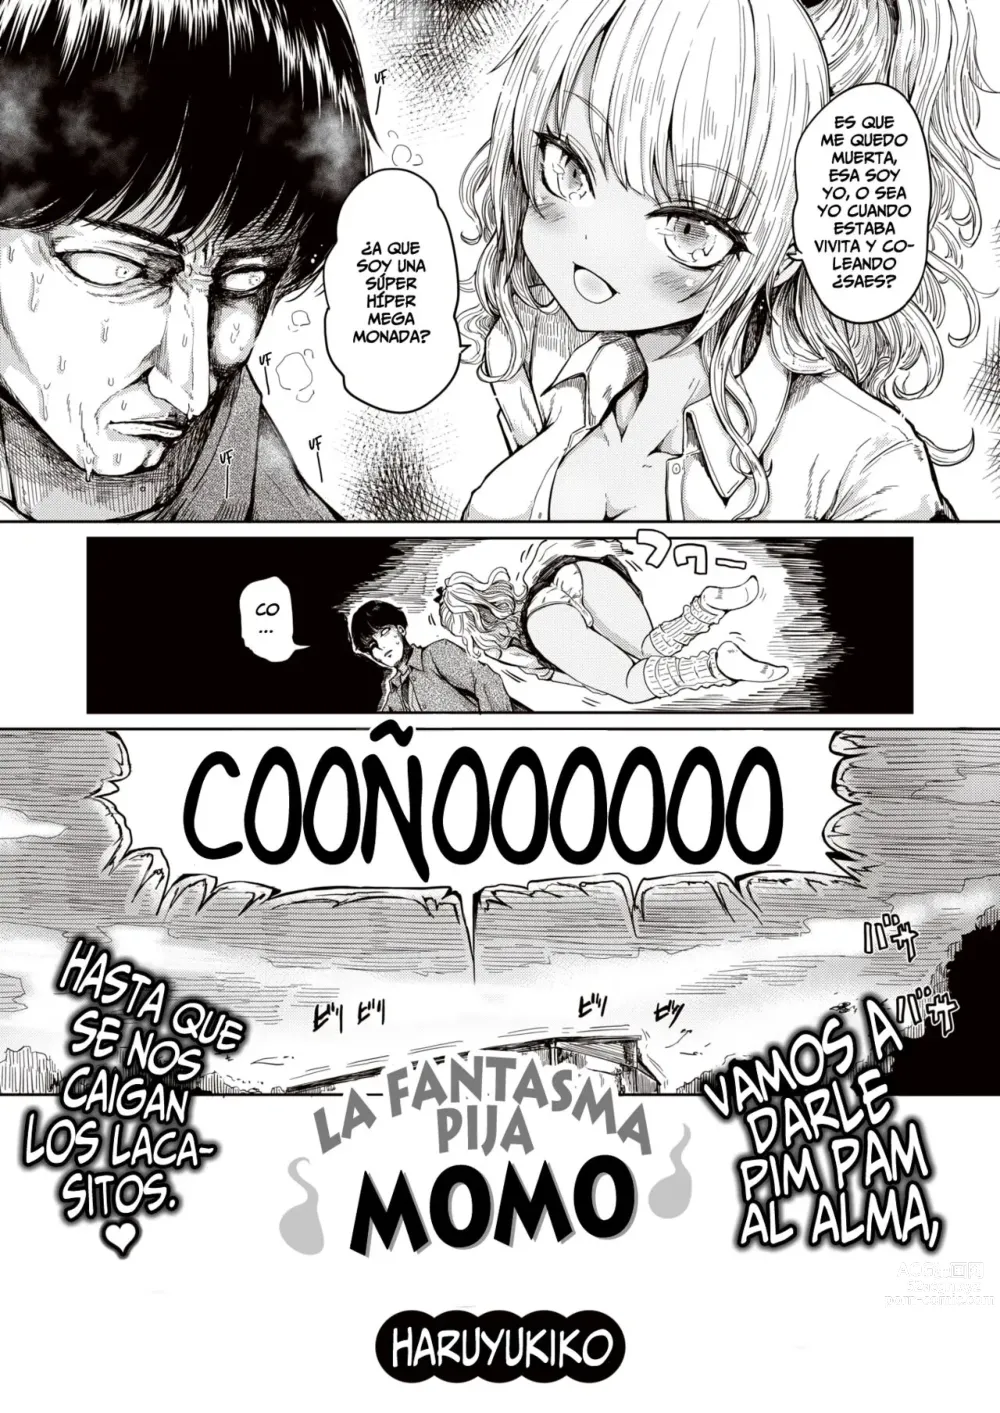 Page 4 of manga La Fantasma Pija Momo